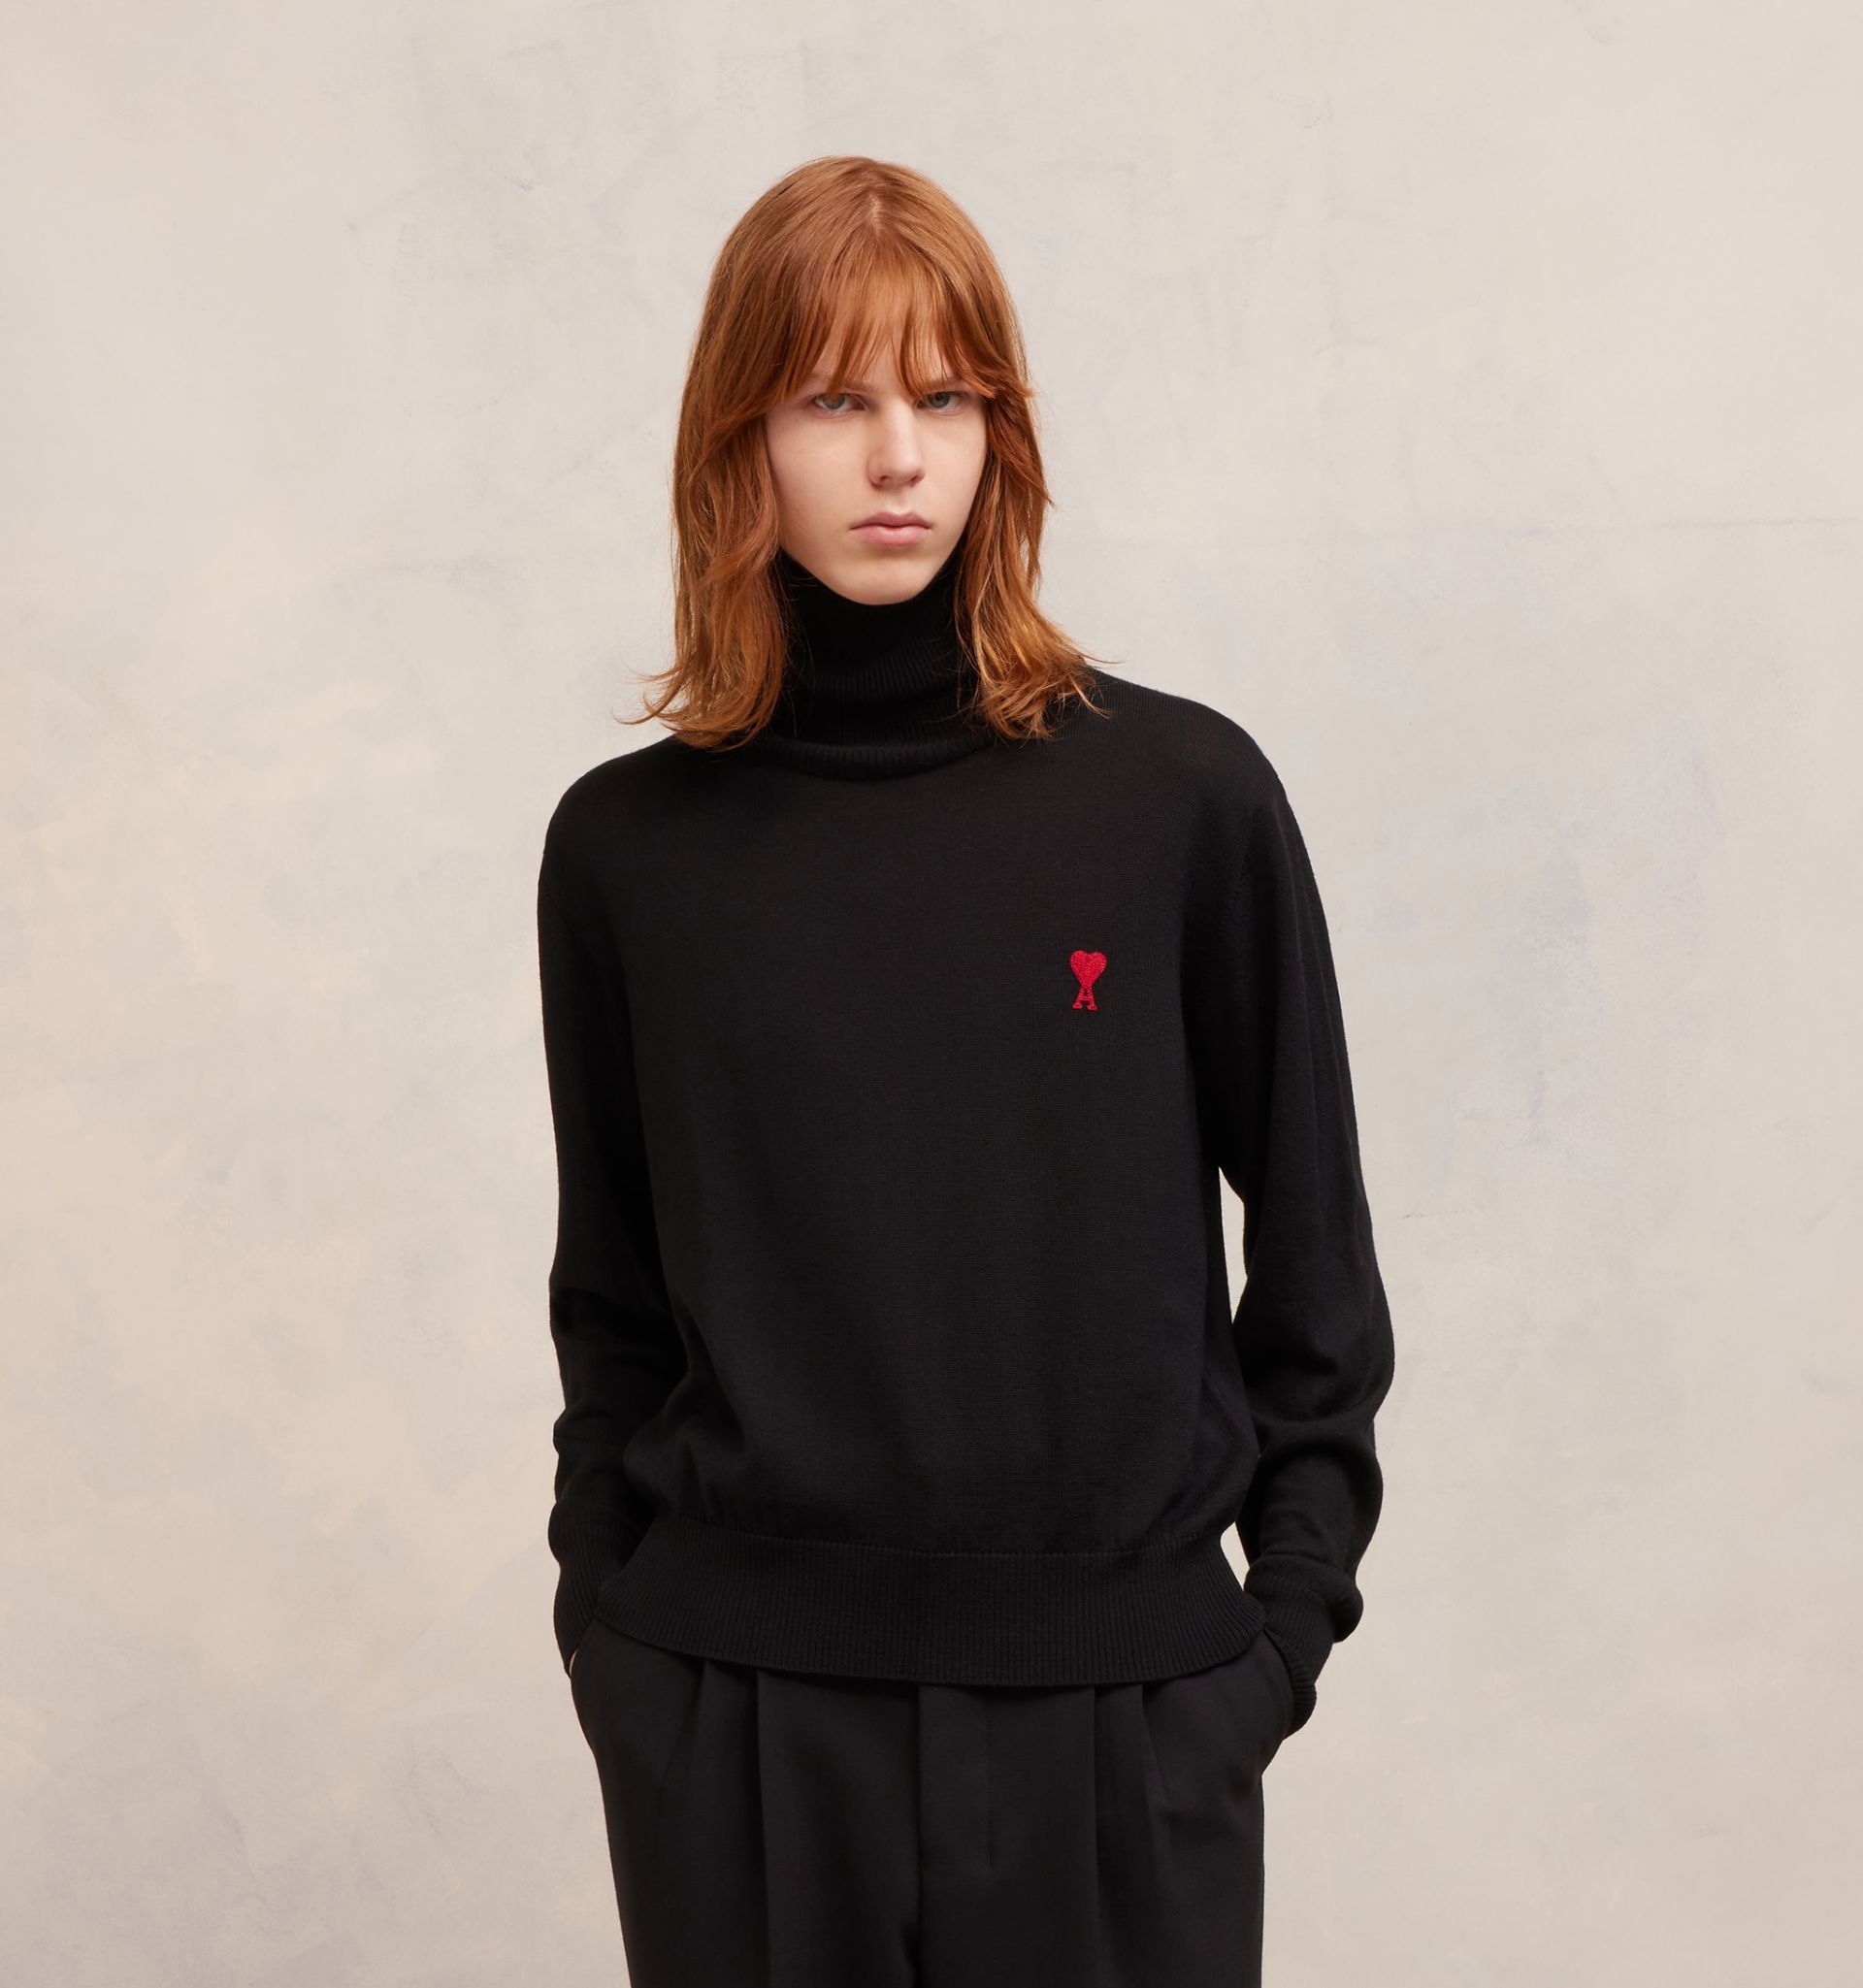 Louis Vuitton Paris Size M 100% Merino Wool Black Sweater Women Top Quality  